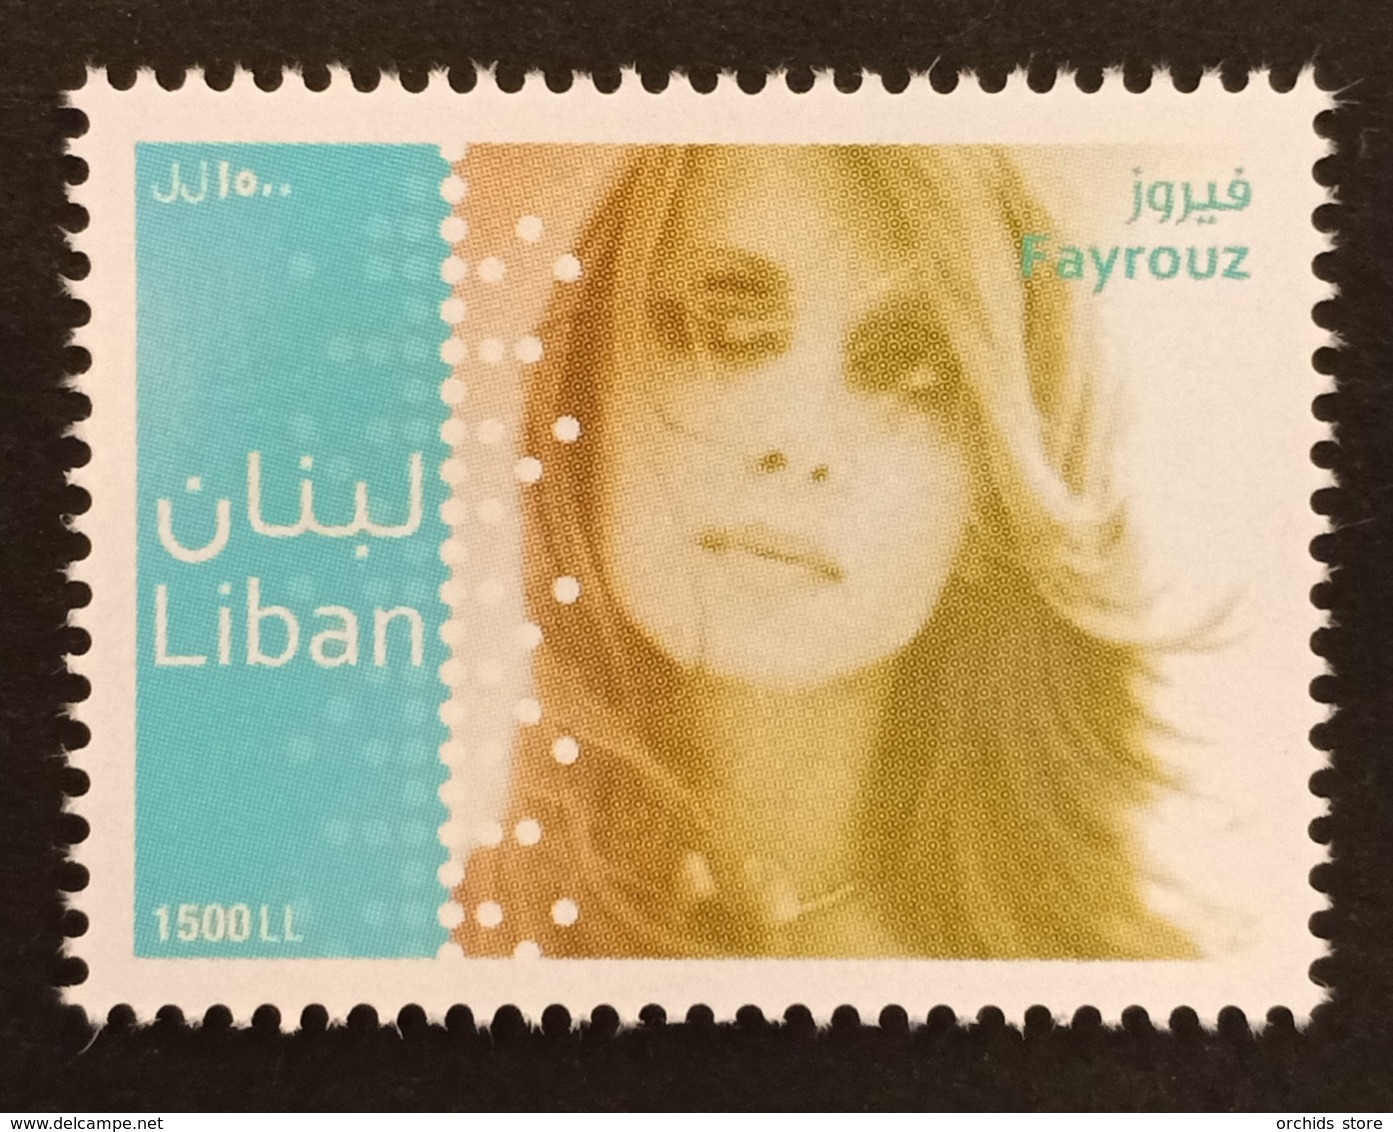 Lebanon 2011 MNH Stamp - Fayrouz Famous Arabic Singer - Lebanon